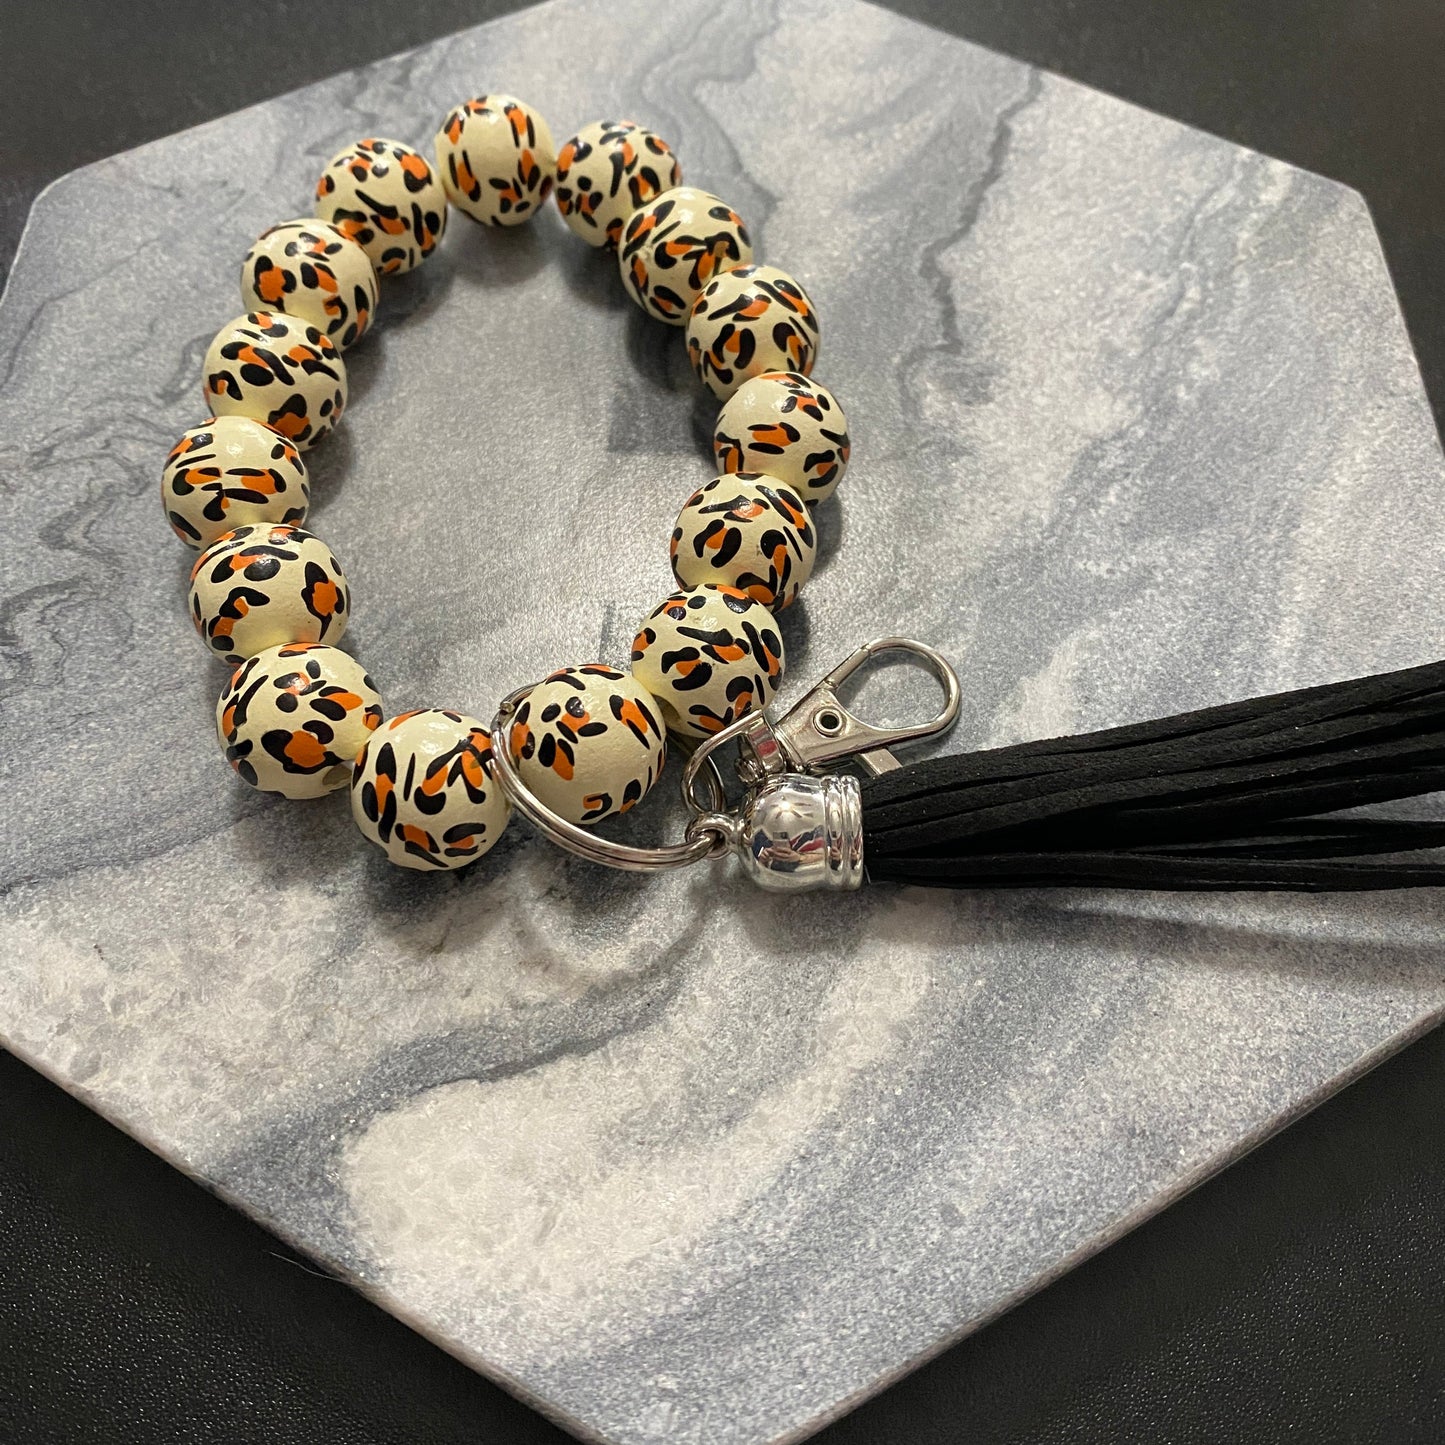 Wooden Bead Bracelet Keychain - Animal Print